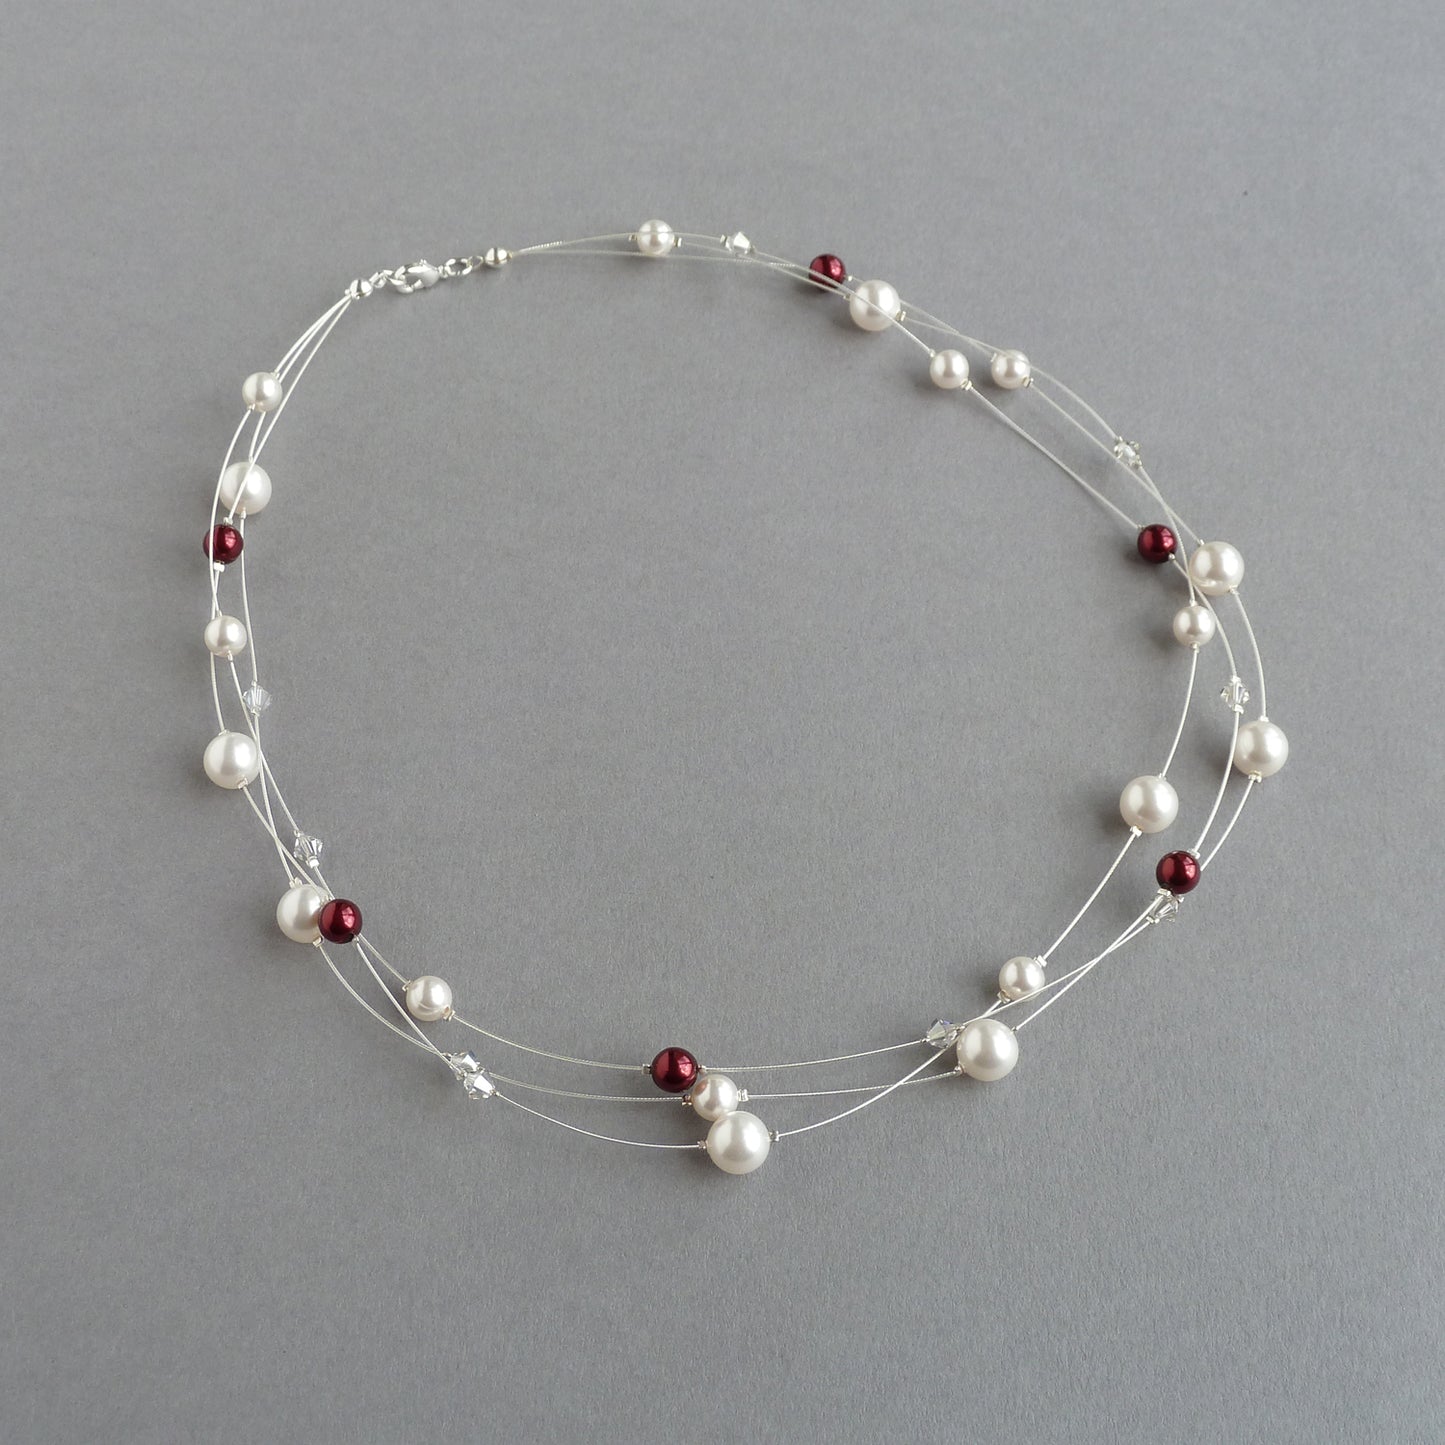 White and dark red multi-strand necklace